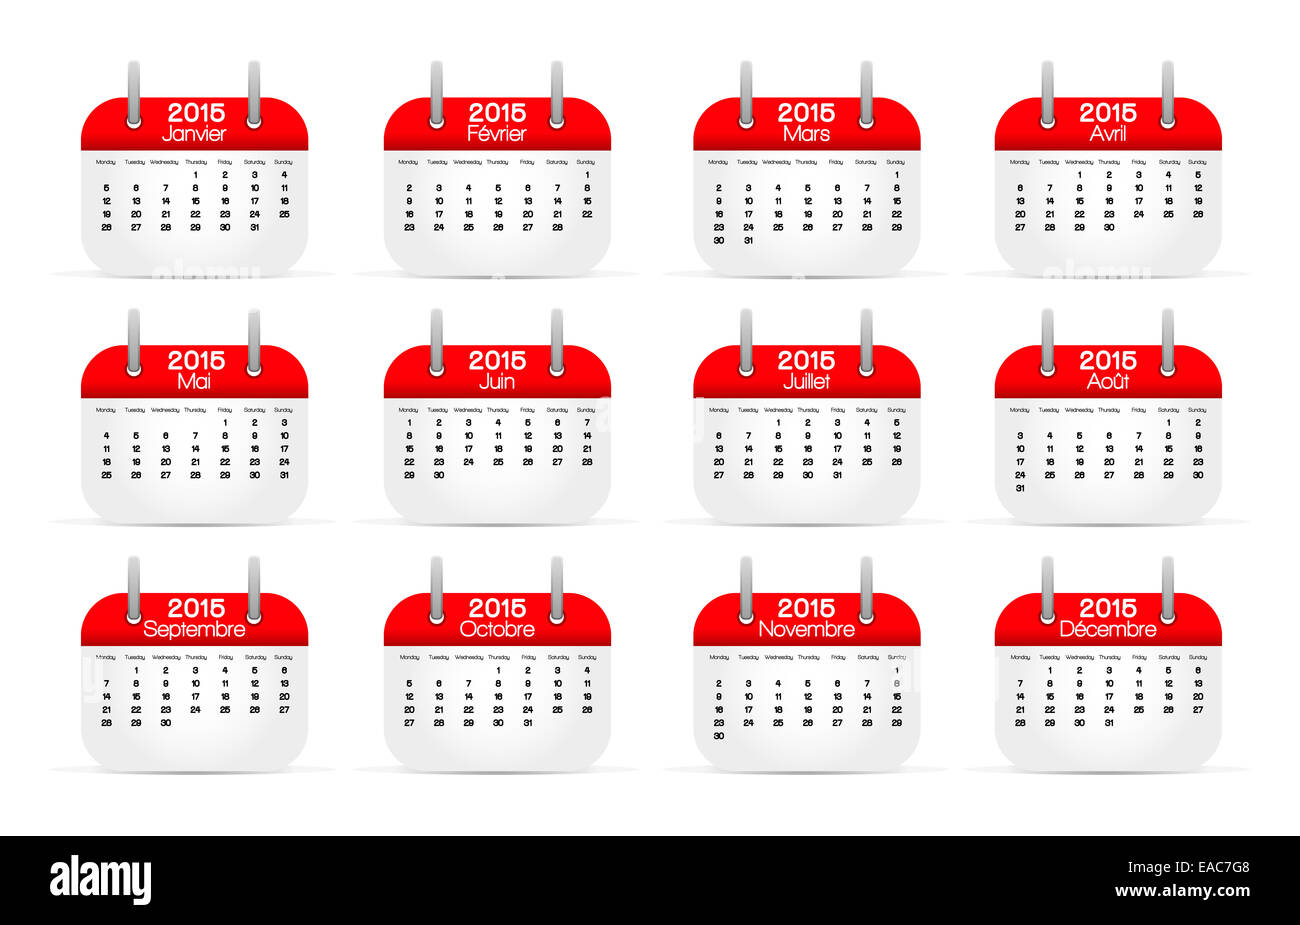 Annual Calendar 2015 French language vector illustration Stock Photo